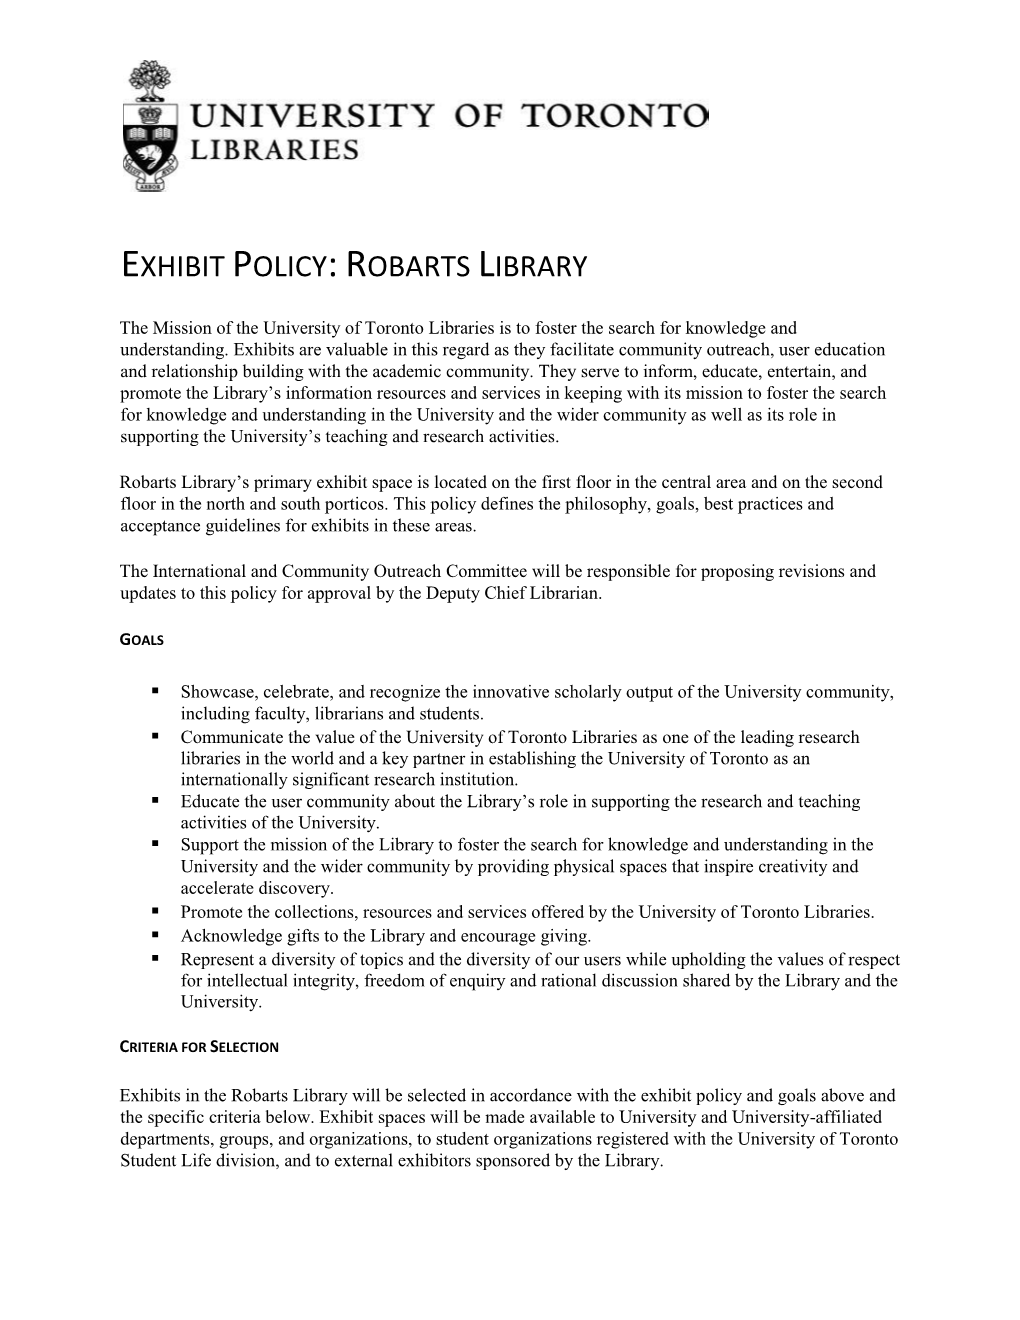 Robarts Library Exhibit Policy